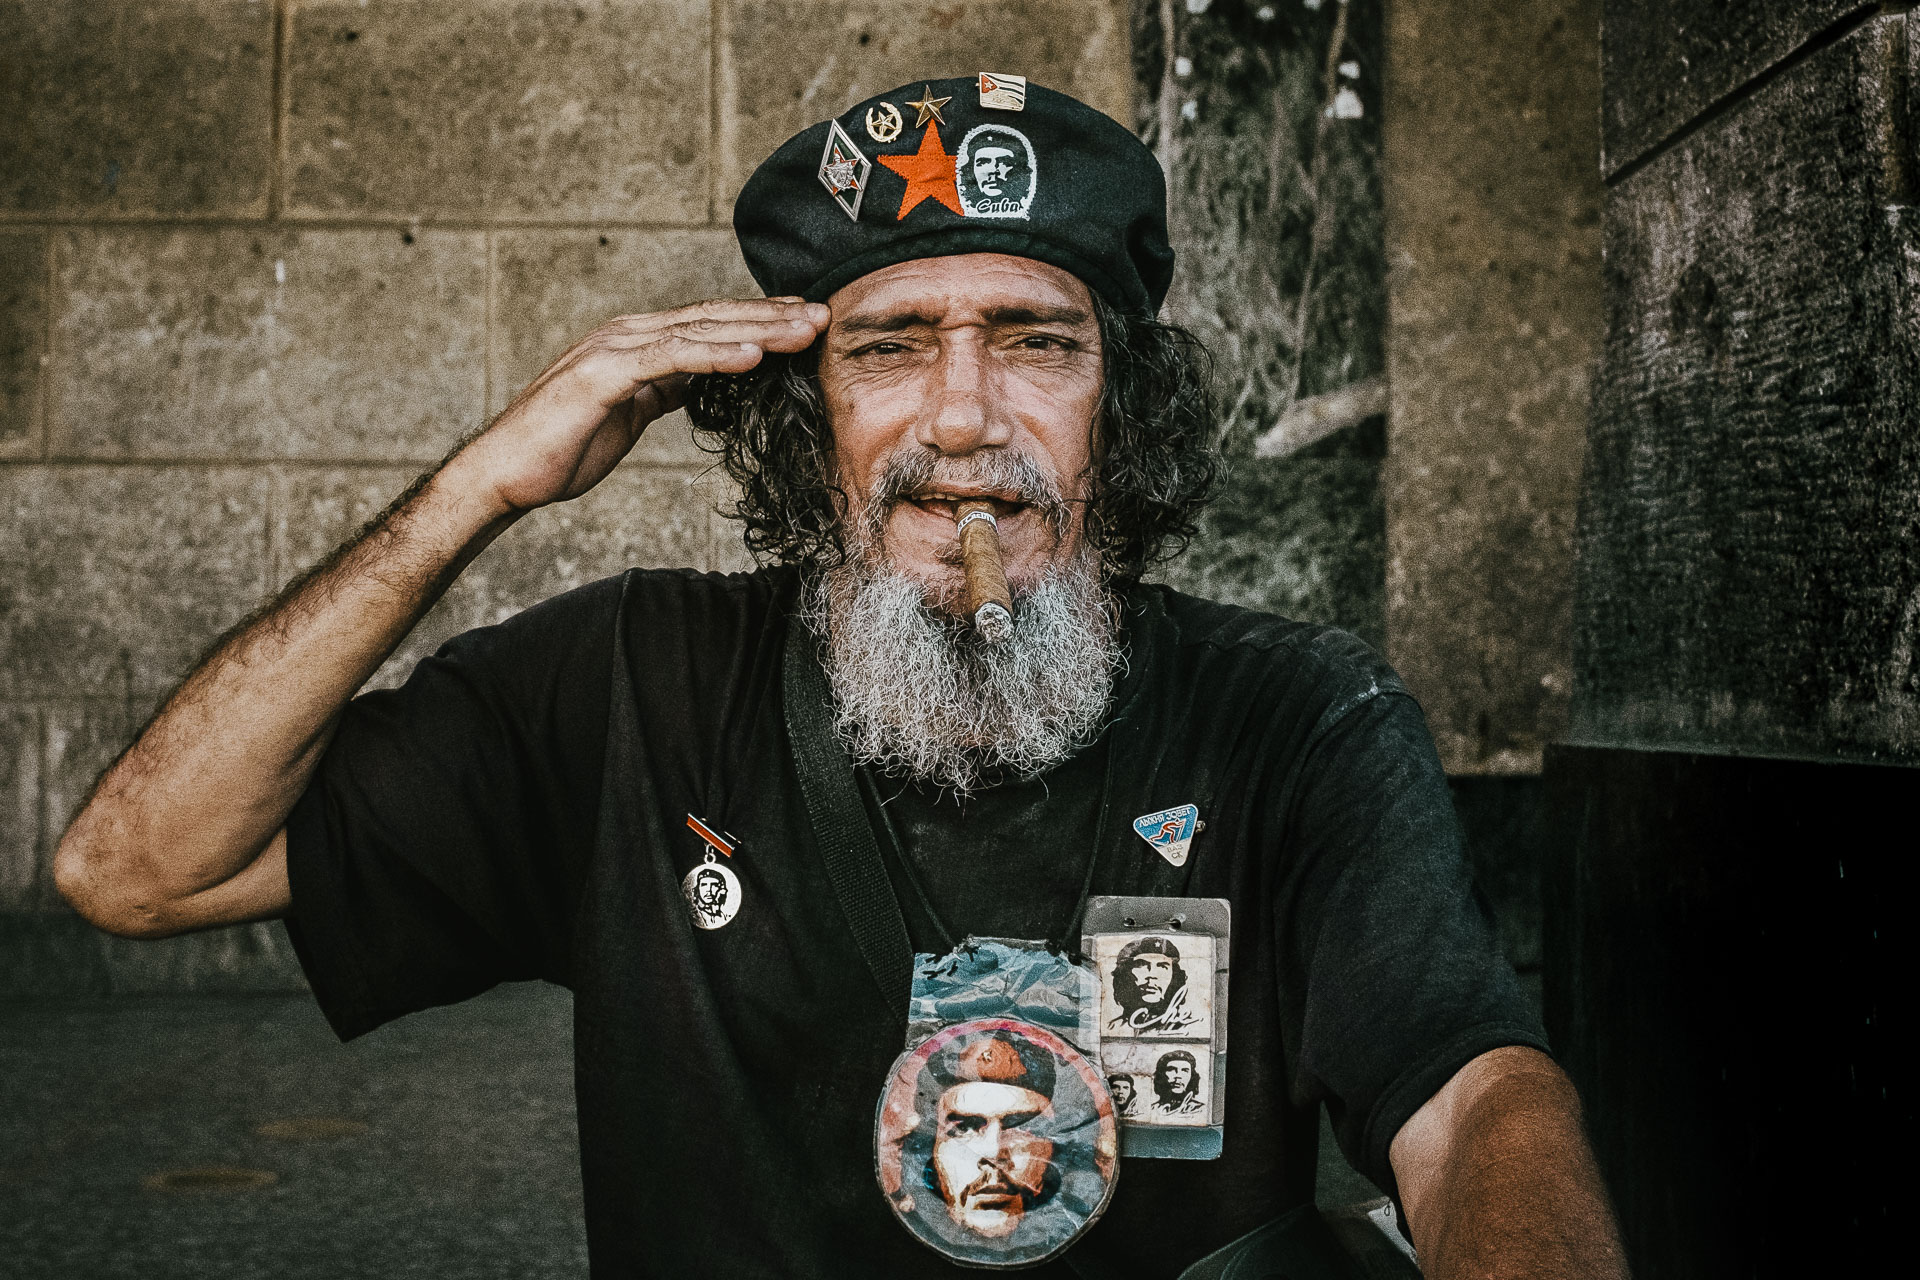 Che Guevara double,Personality & Homeless || Havanna, Cuba 2018 by Ondrej kolacek